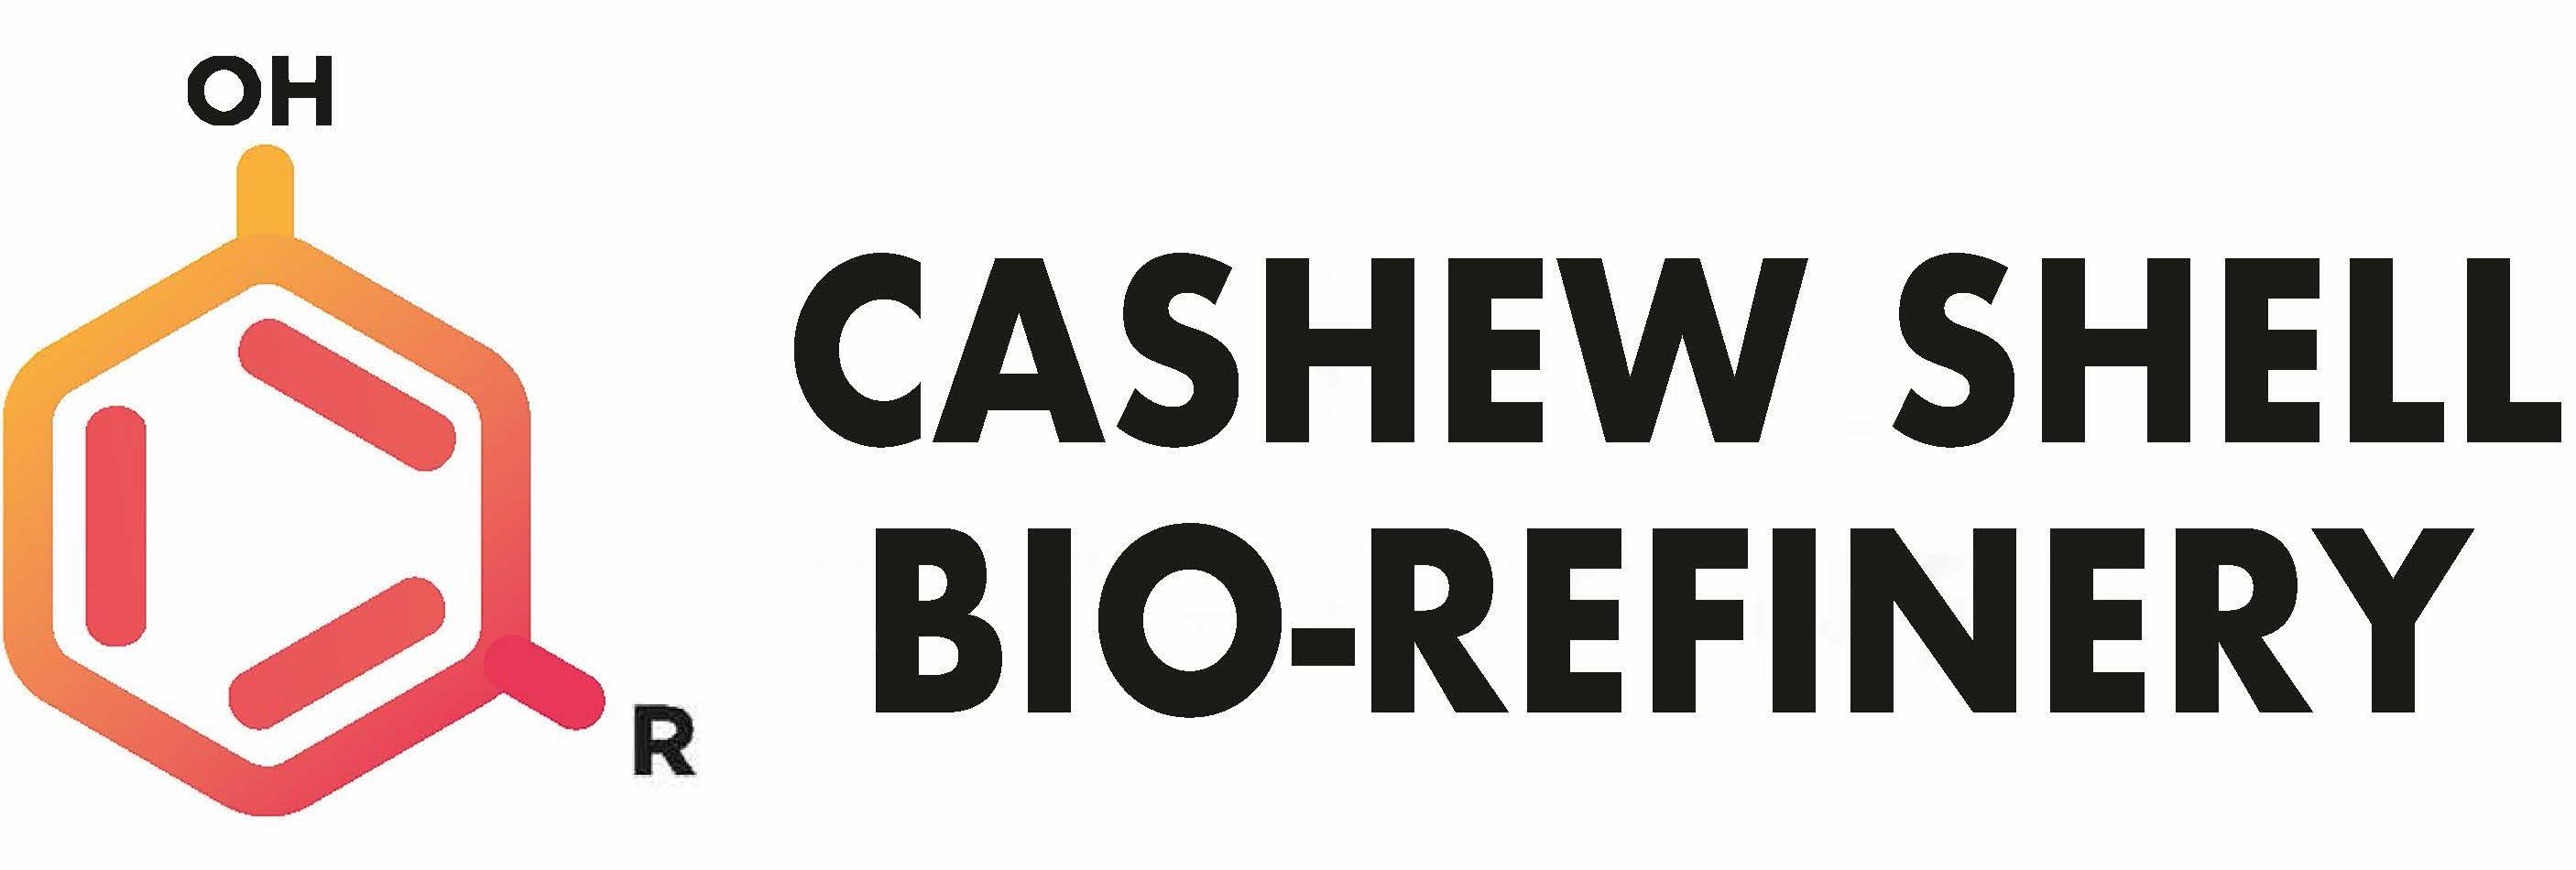 CSBR (Cashew Shell BioRefinery)